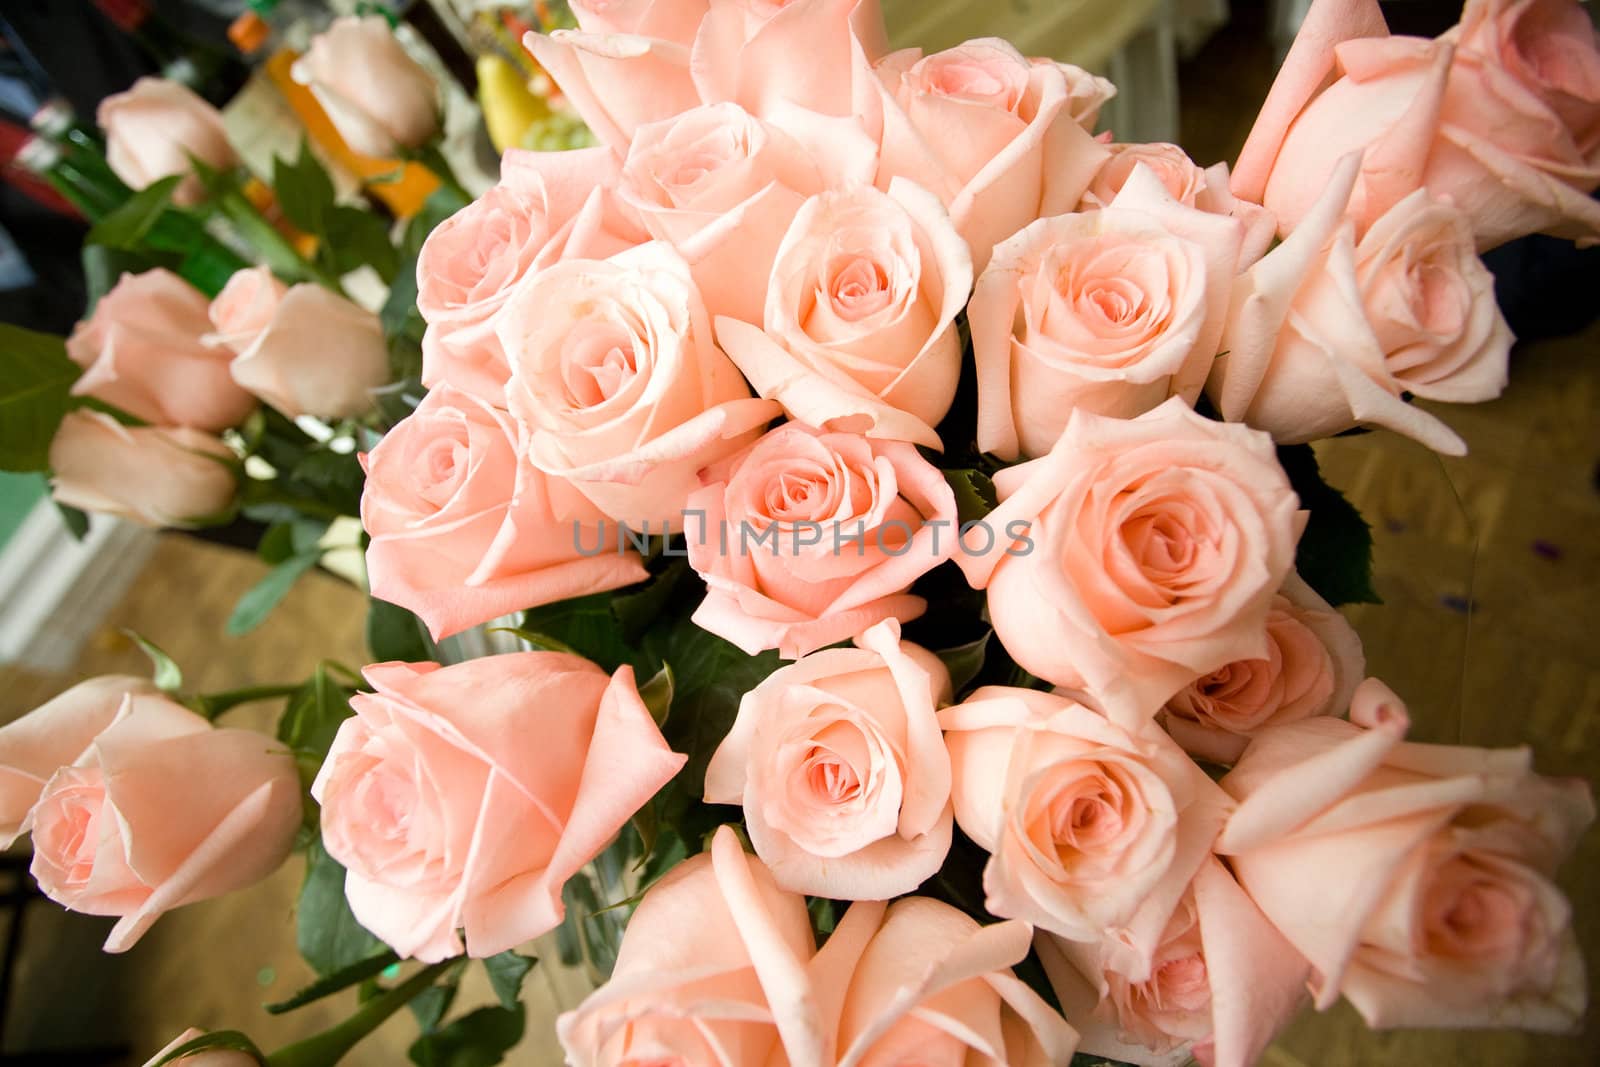 beautiful rose bouquet as a present